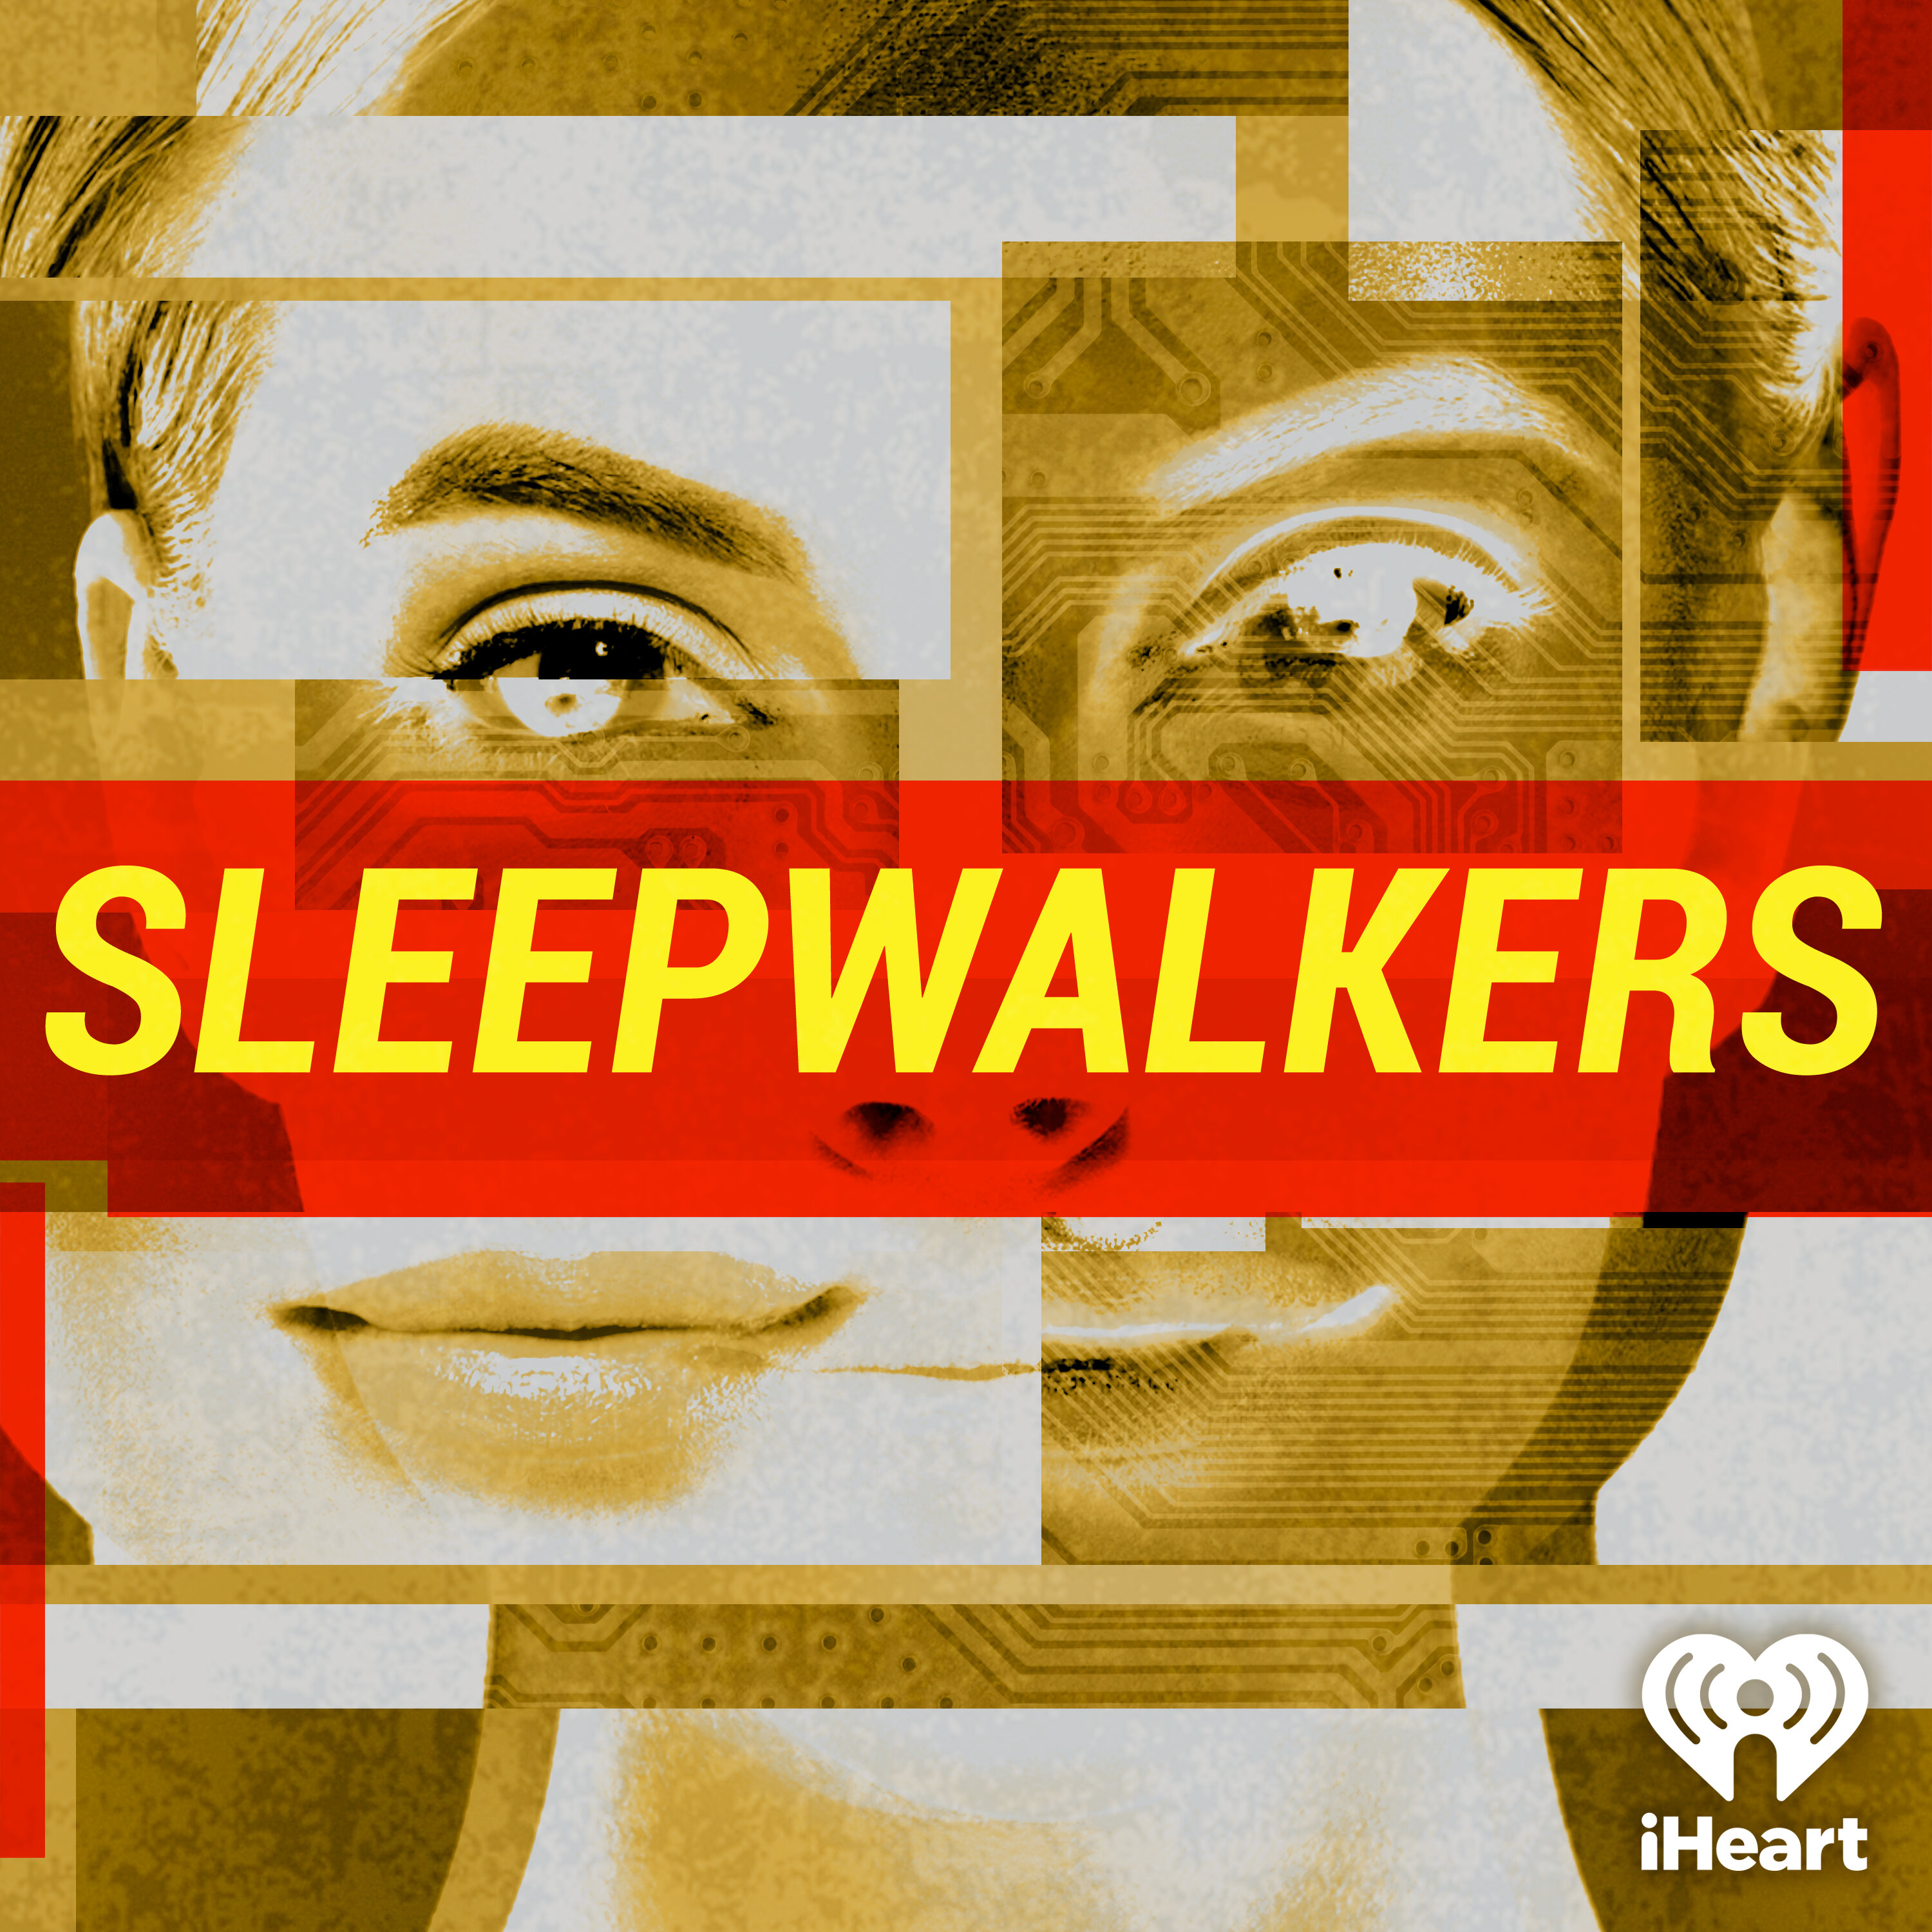 Sleepwalkers podcast show image